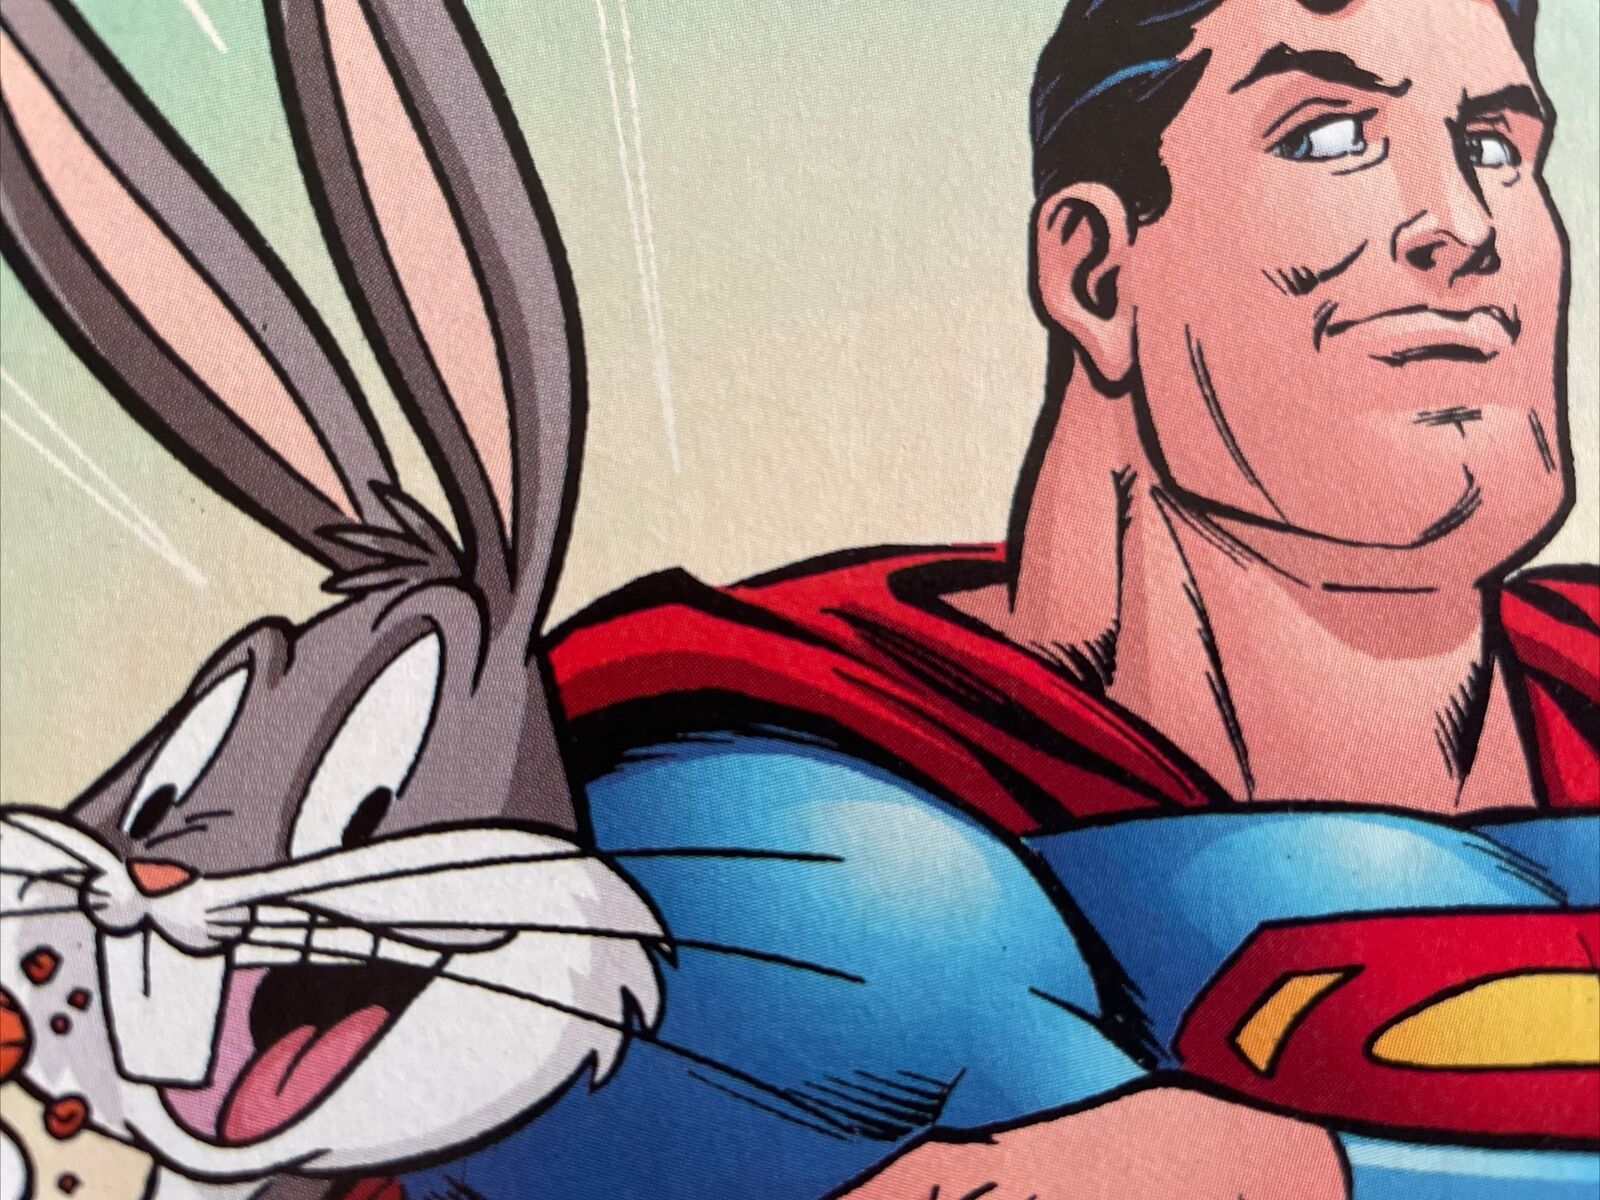 Superman & Bugs Bunny # 1-4 • Complete Set DC Comics 1 2 3 4 2000 Low Print Run